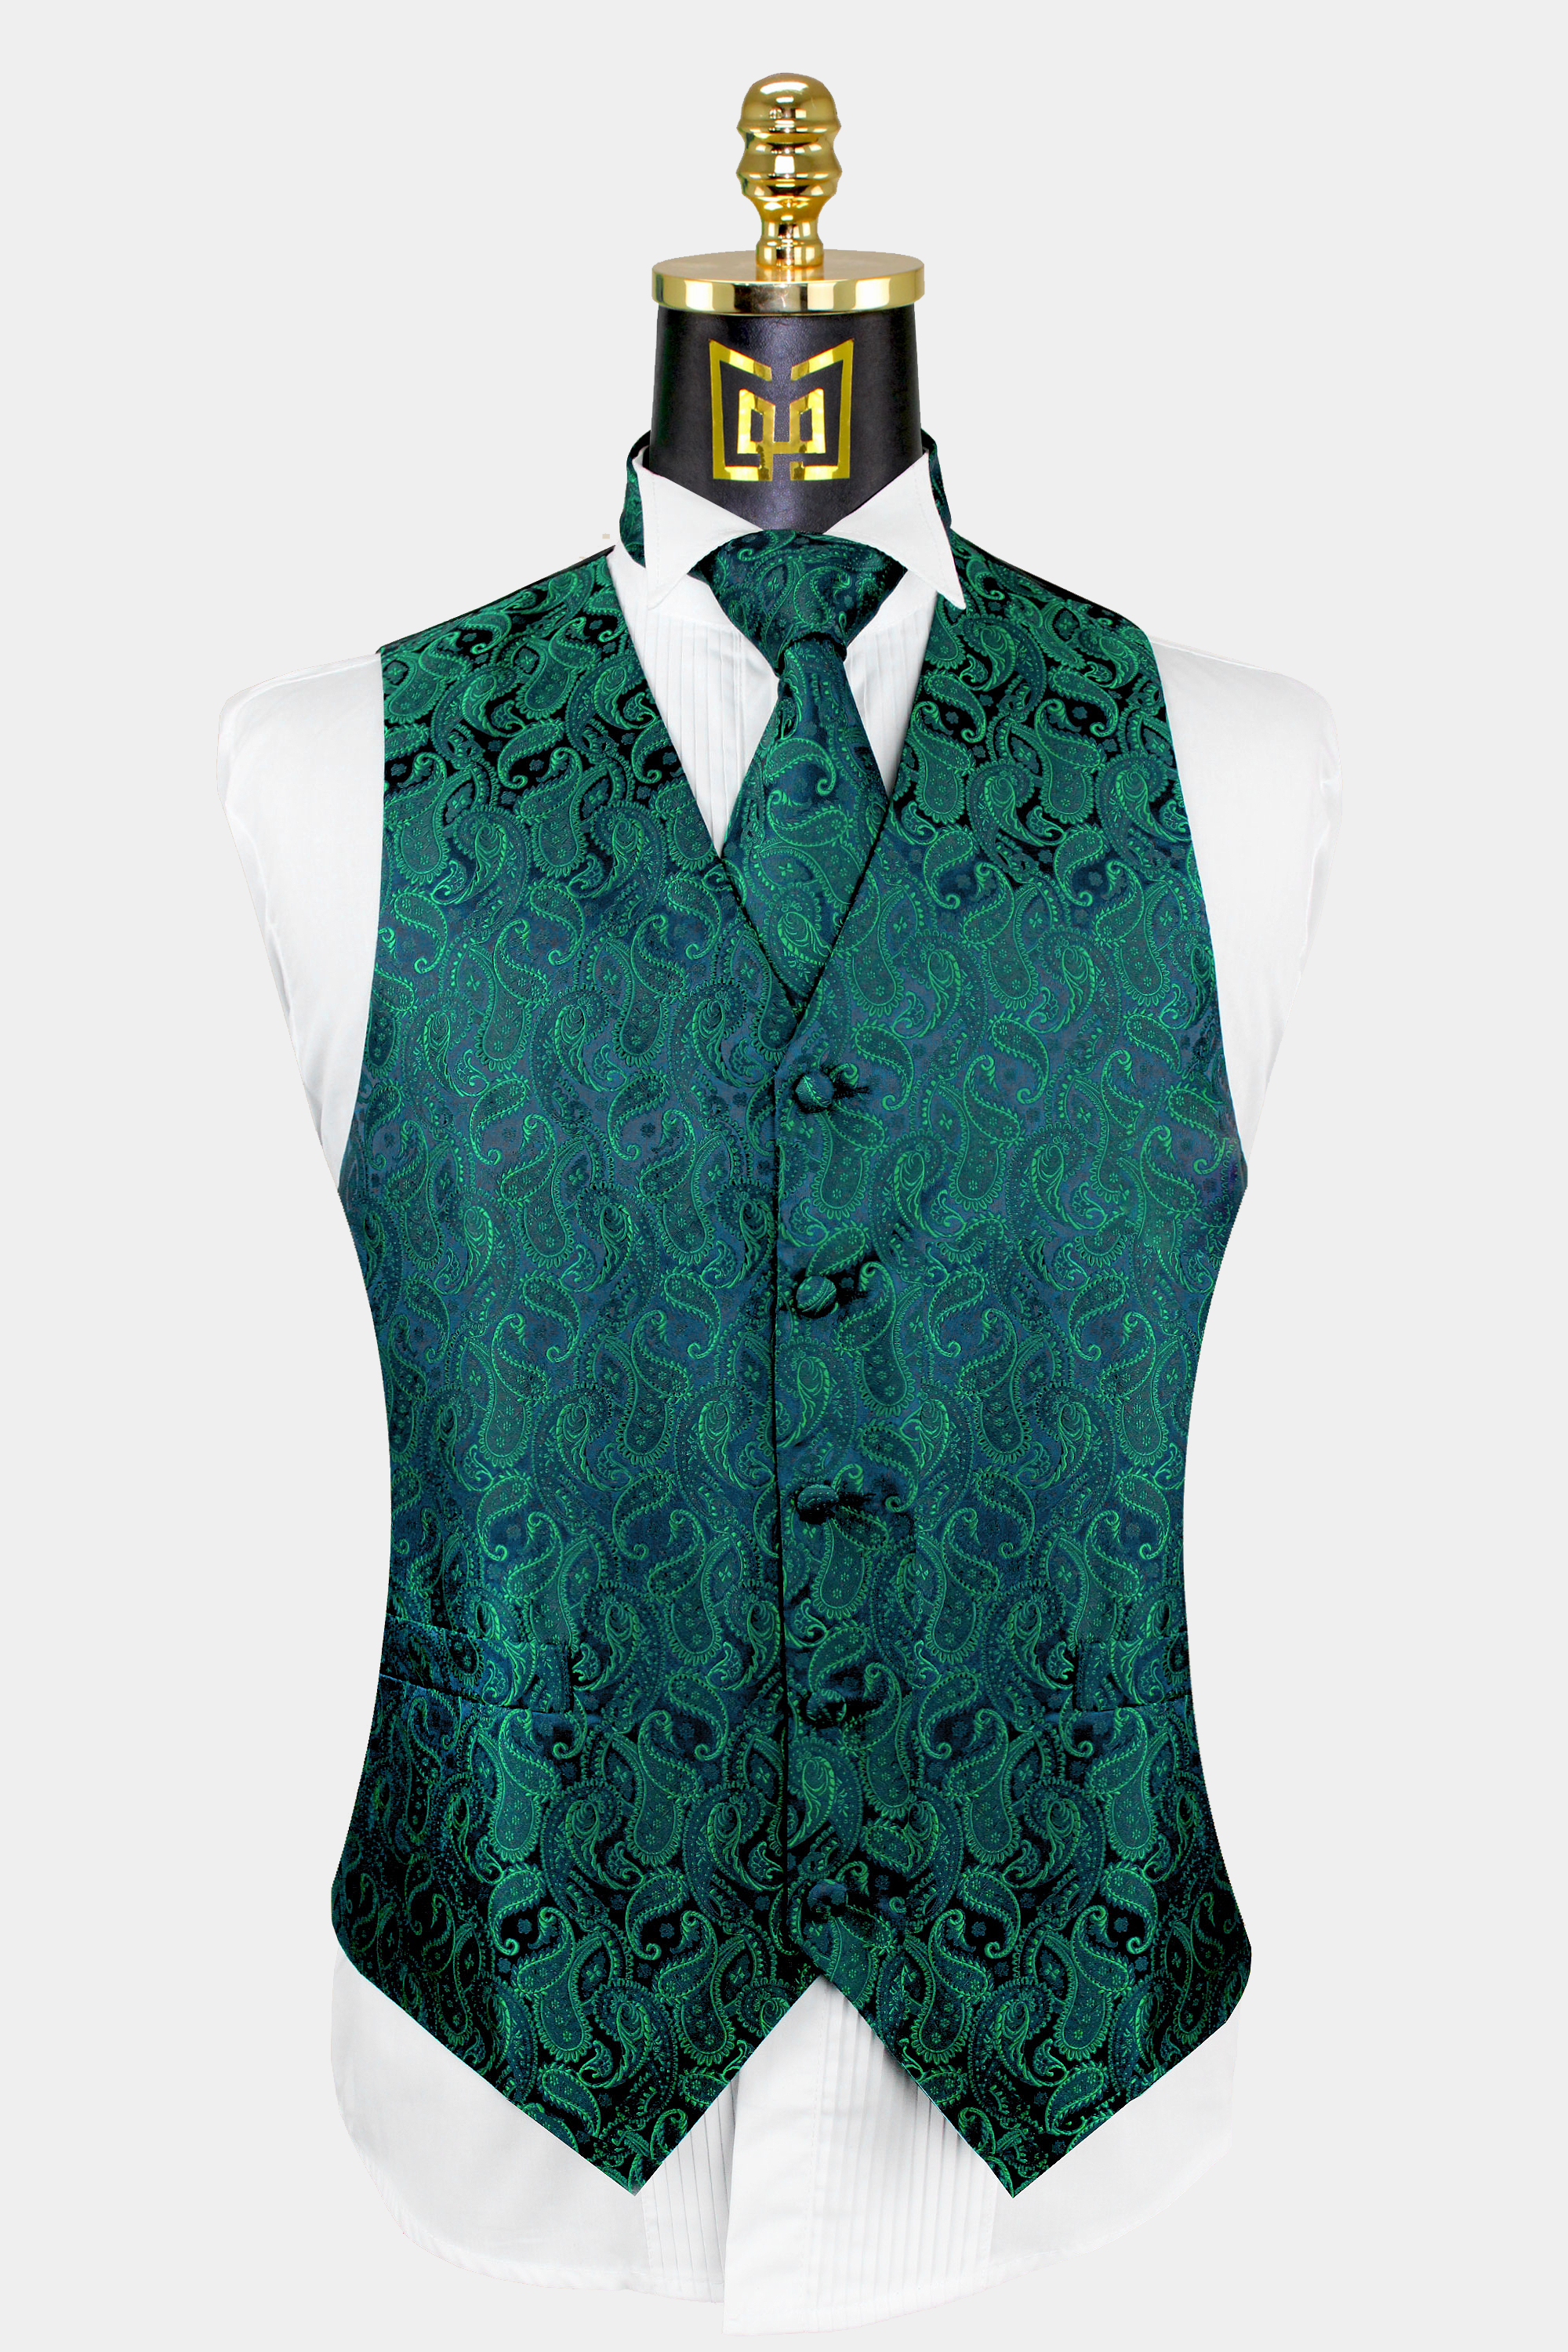 New Brand Q polyester men's Paisley vest tuxedo waistcoat_neck tie MINT GREEN 